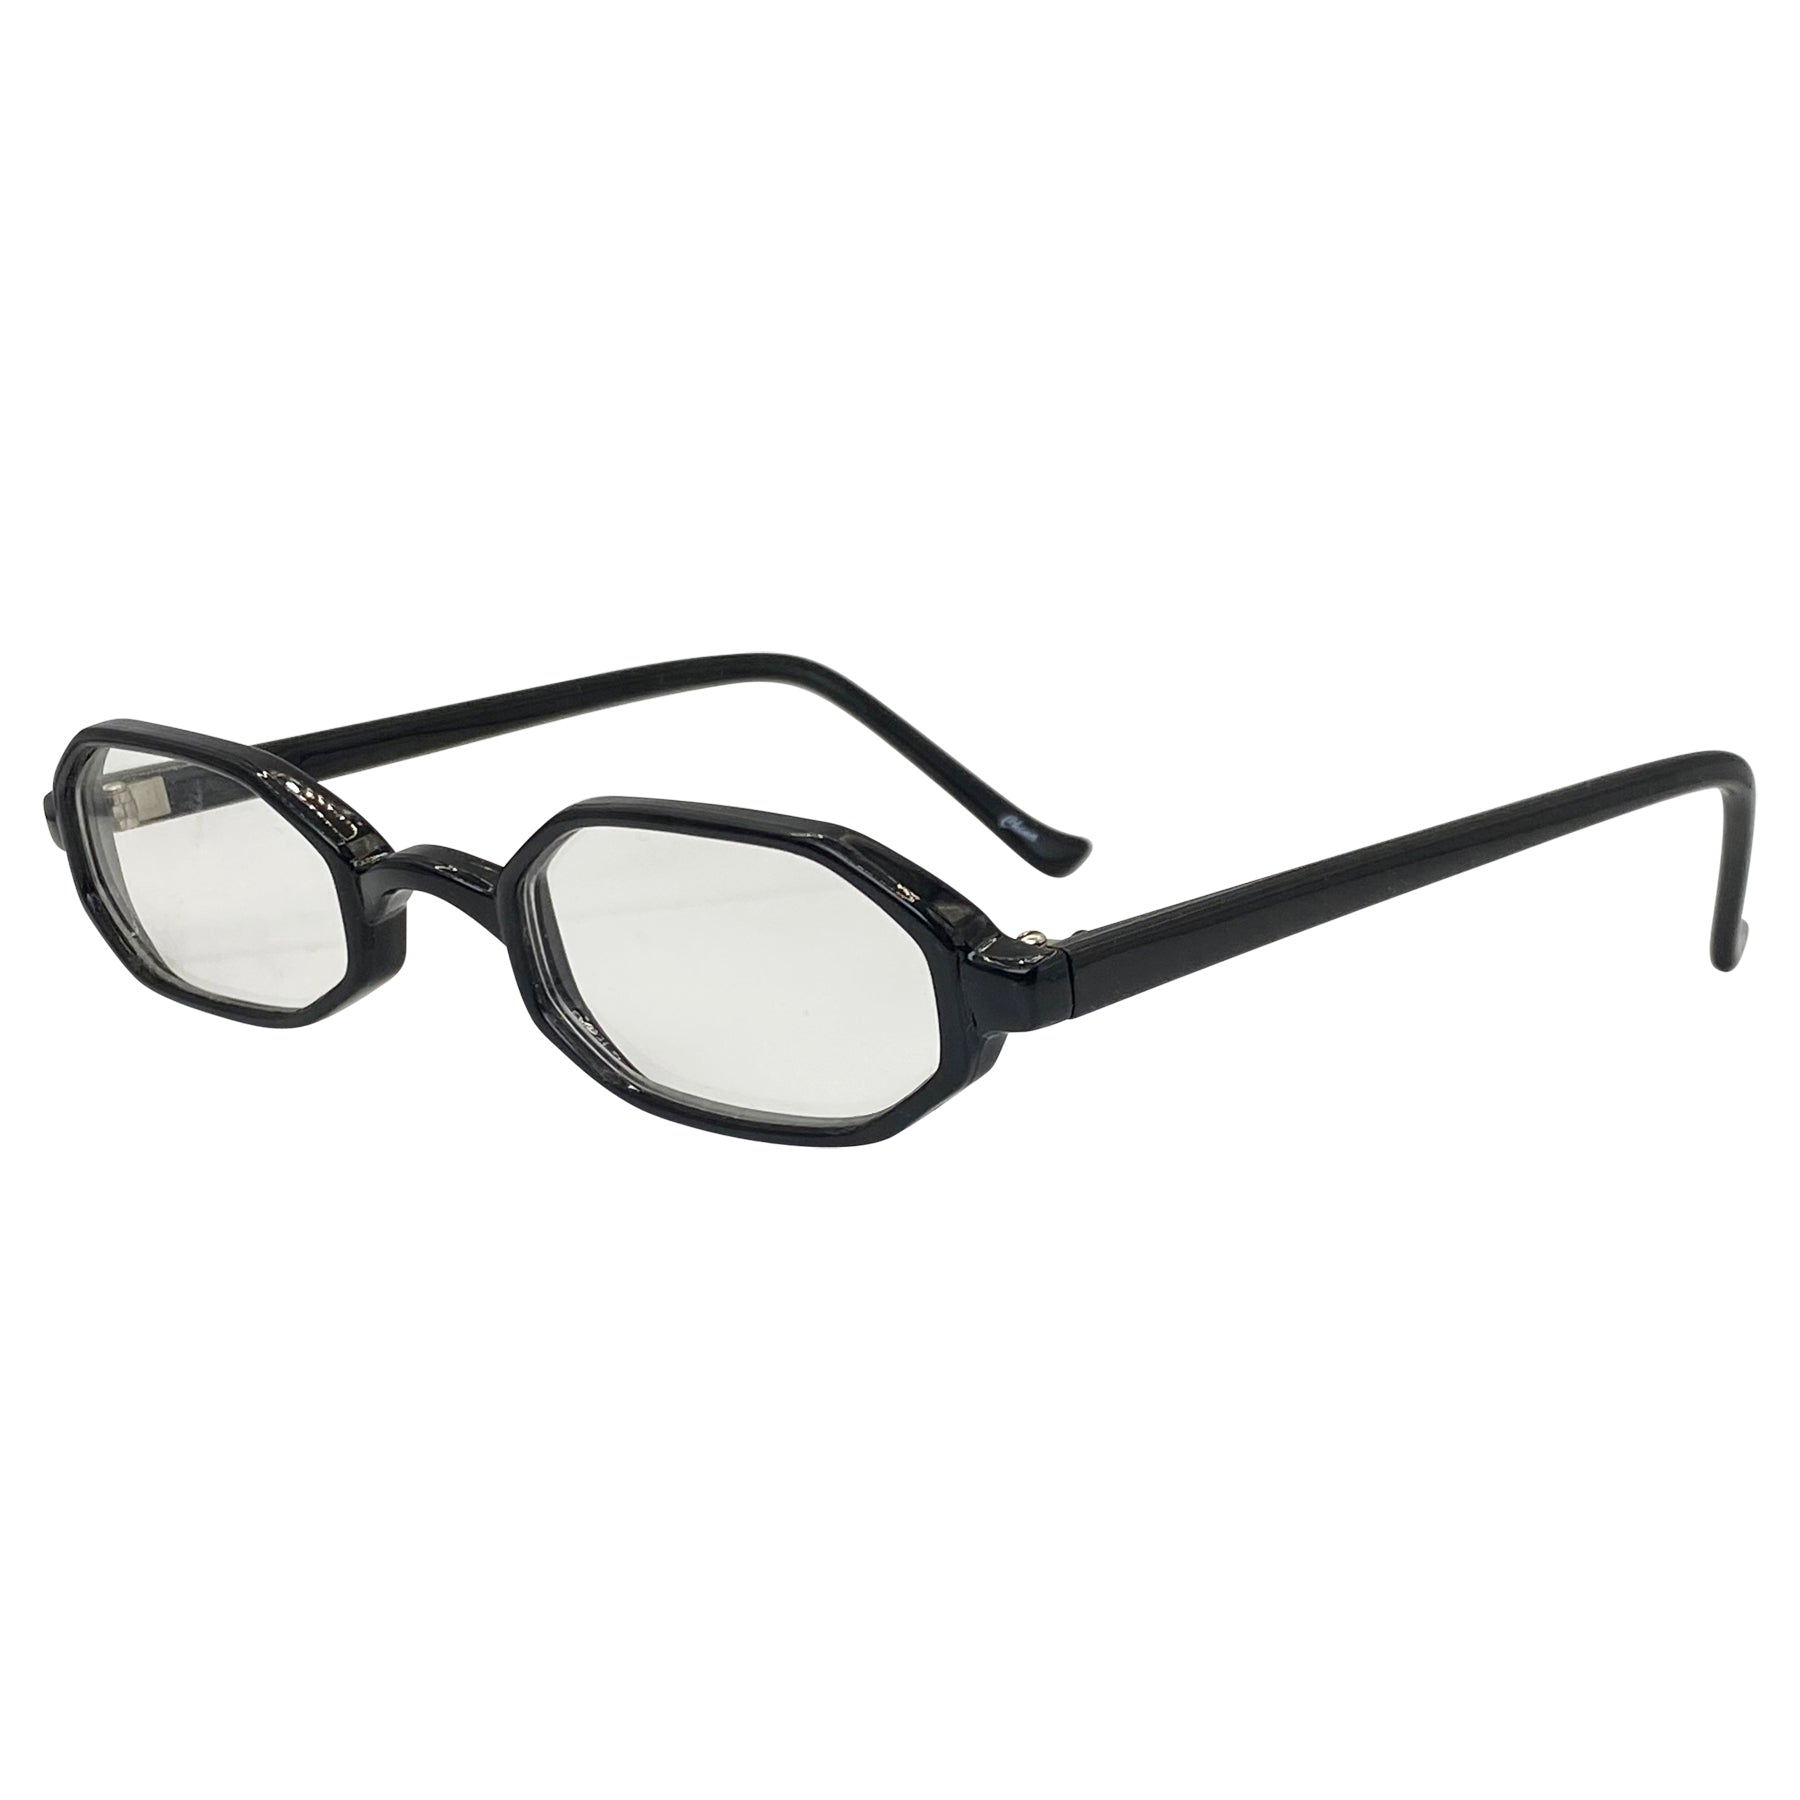 Polarized Slim Small Classic Fit Over Most Glasses Black Tortoise Sunglasses  28P | eBay